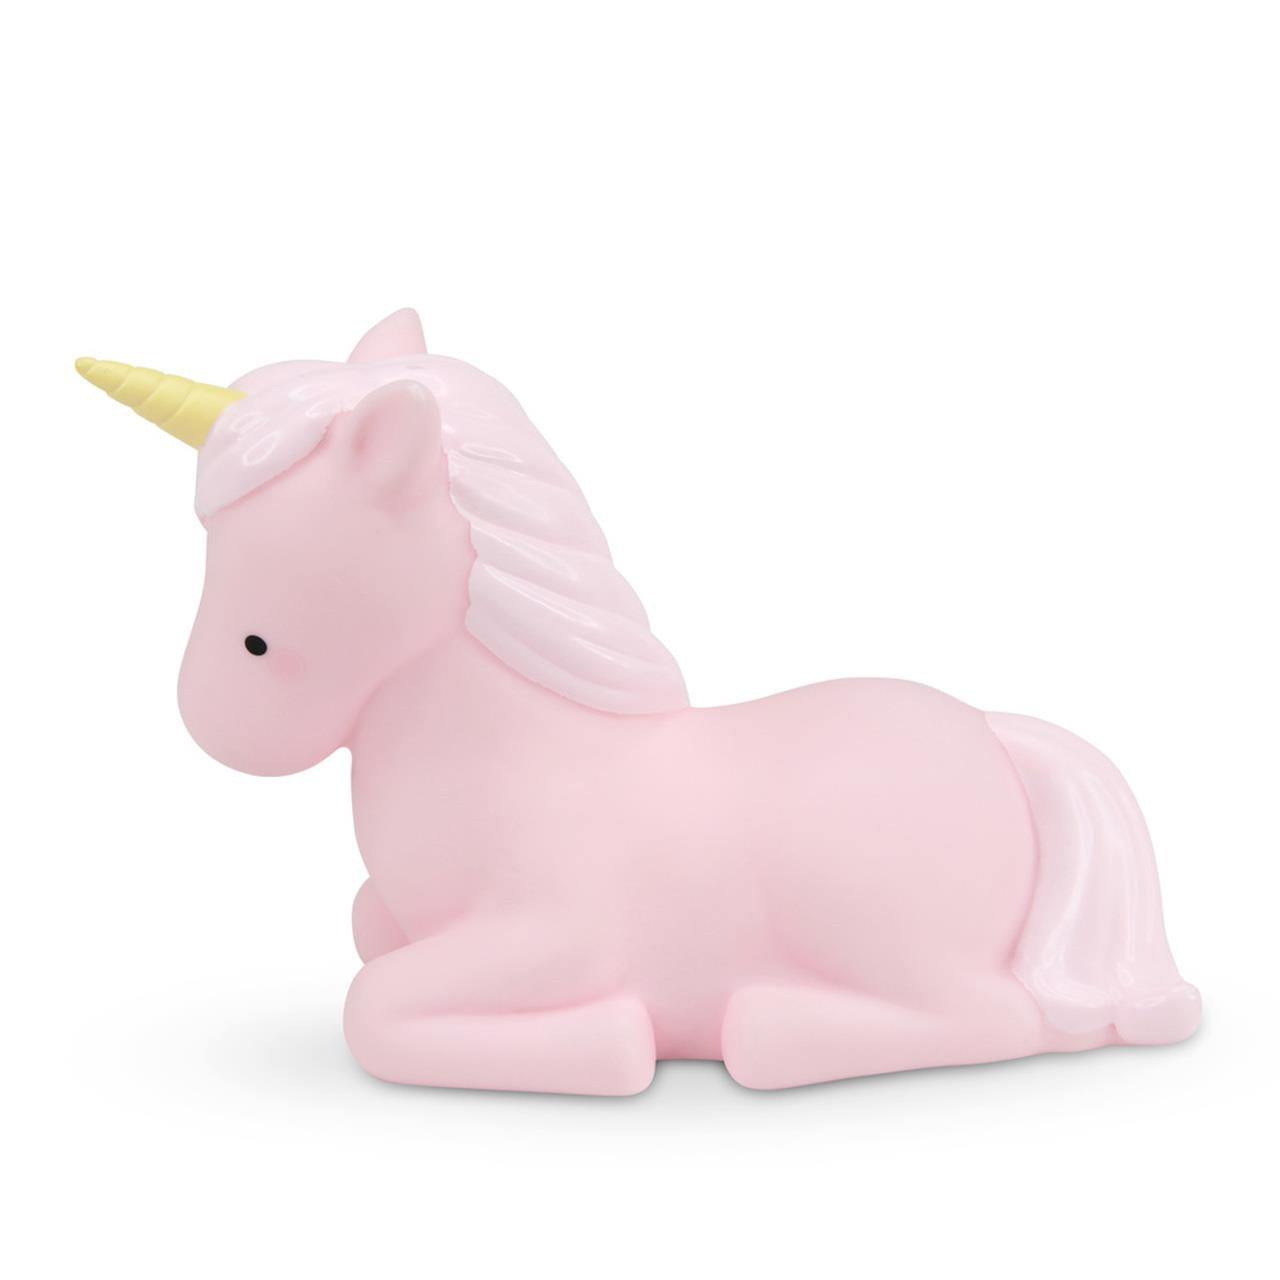 Teeny Tiny Pink Unicorn Little Night Light